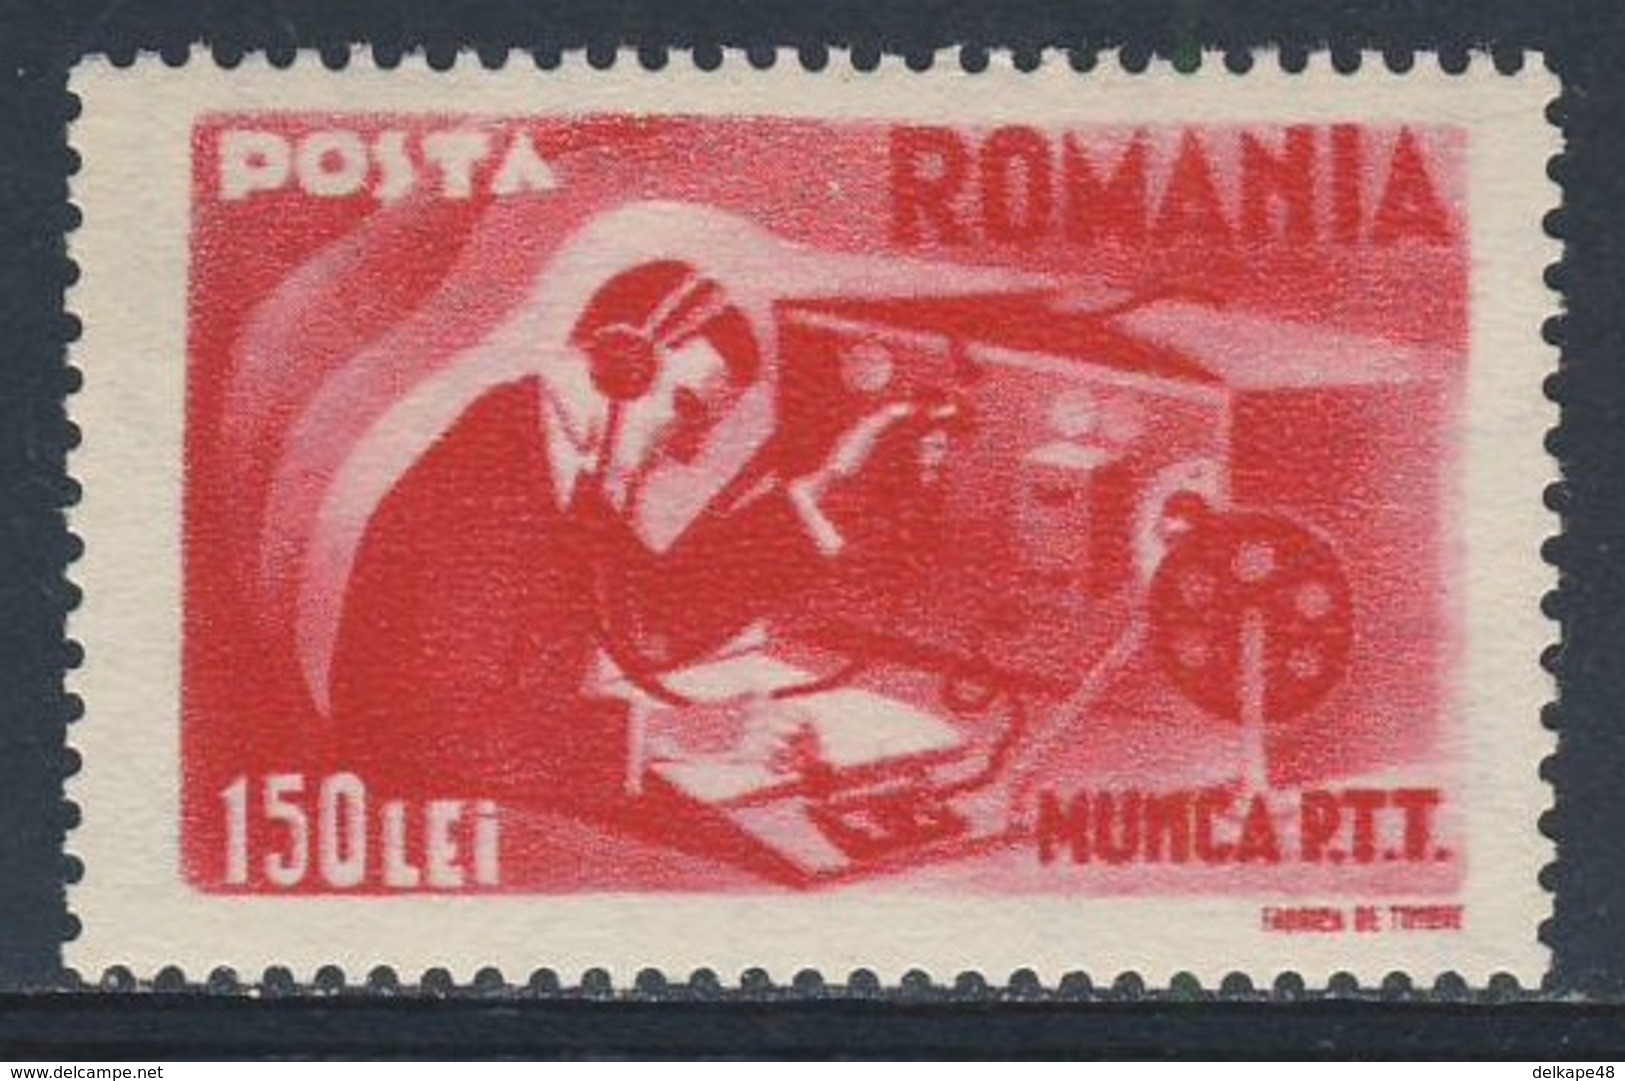 Romania Romana Rumänien 1945 Mi 870 YT B838 SG 1729 * MH - Telegraphist / Telegraphist -  Postwesen / Postal Employees - Telecom